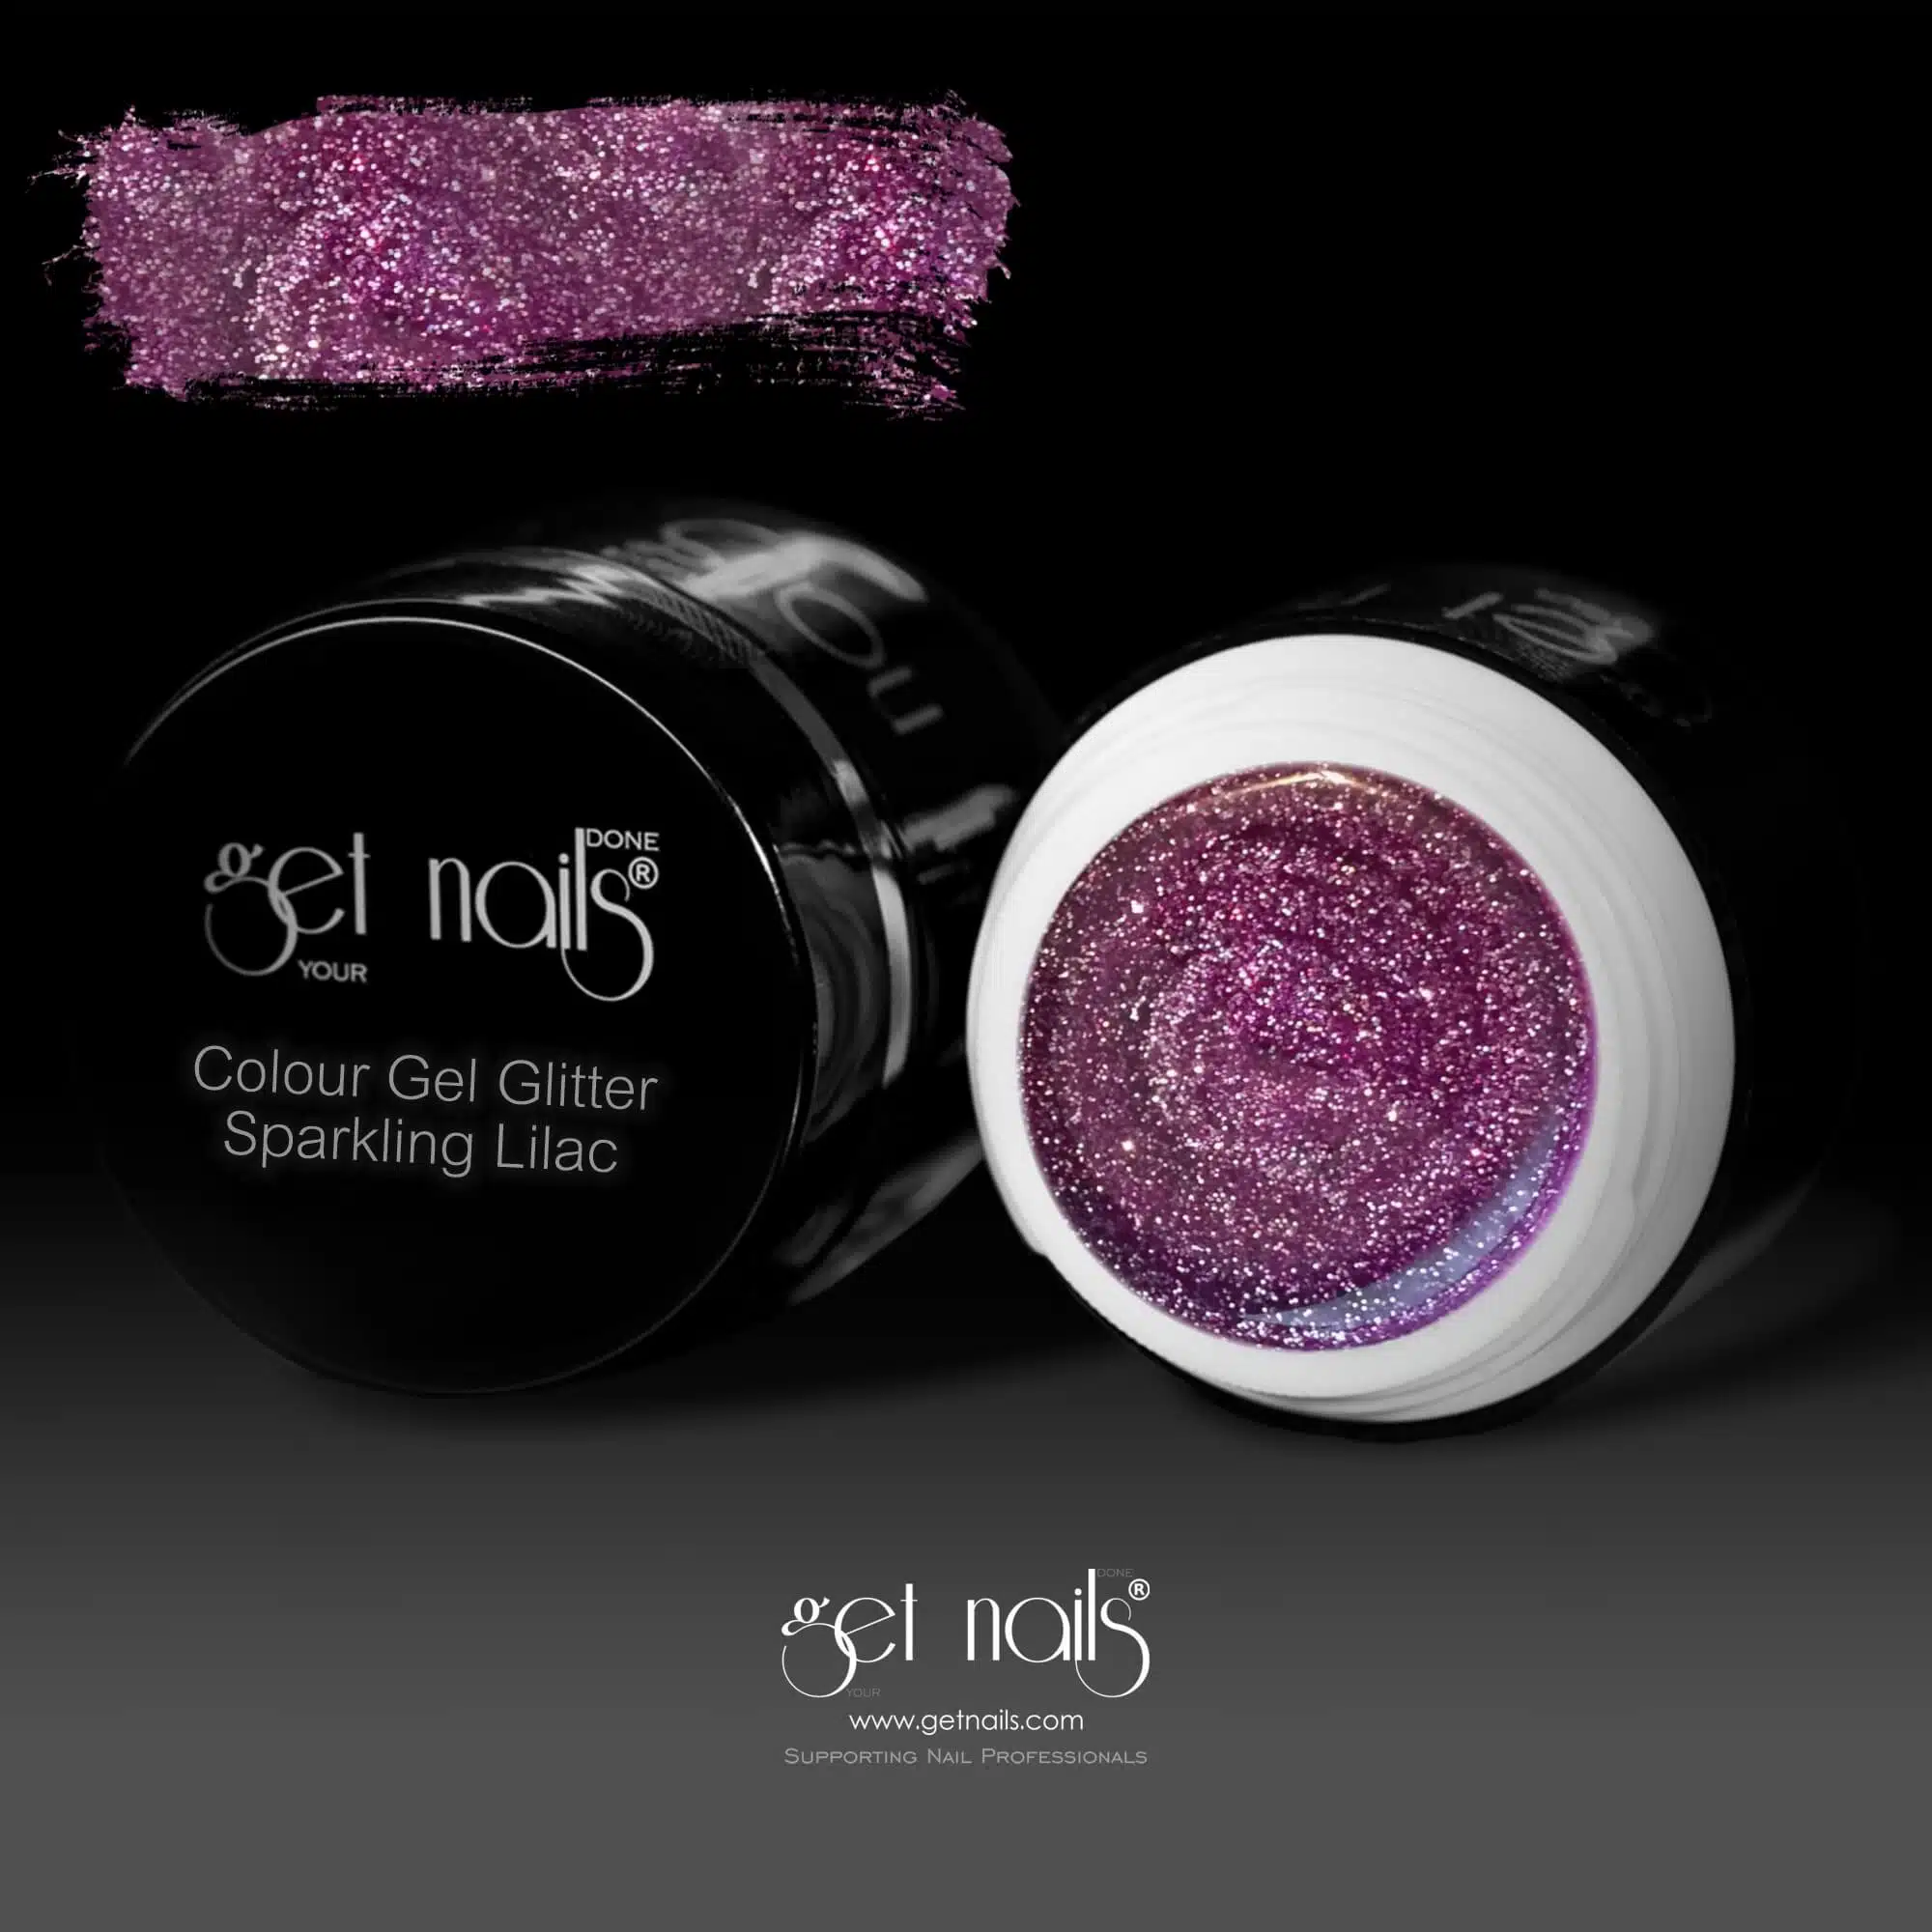 Get Nails Austria - Цветной гель Glitter Sparkling Lilac 5g